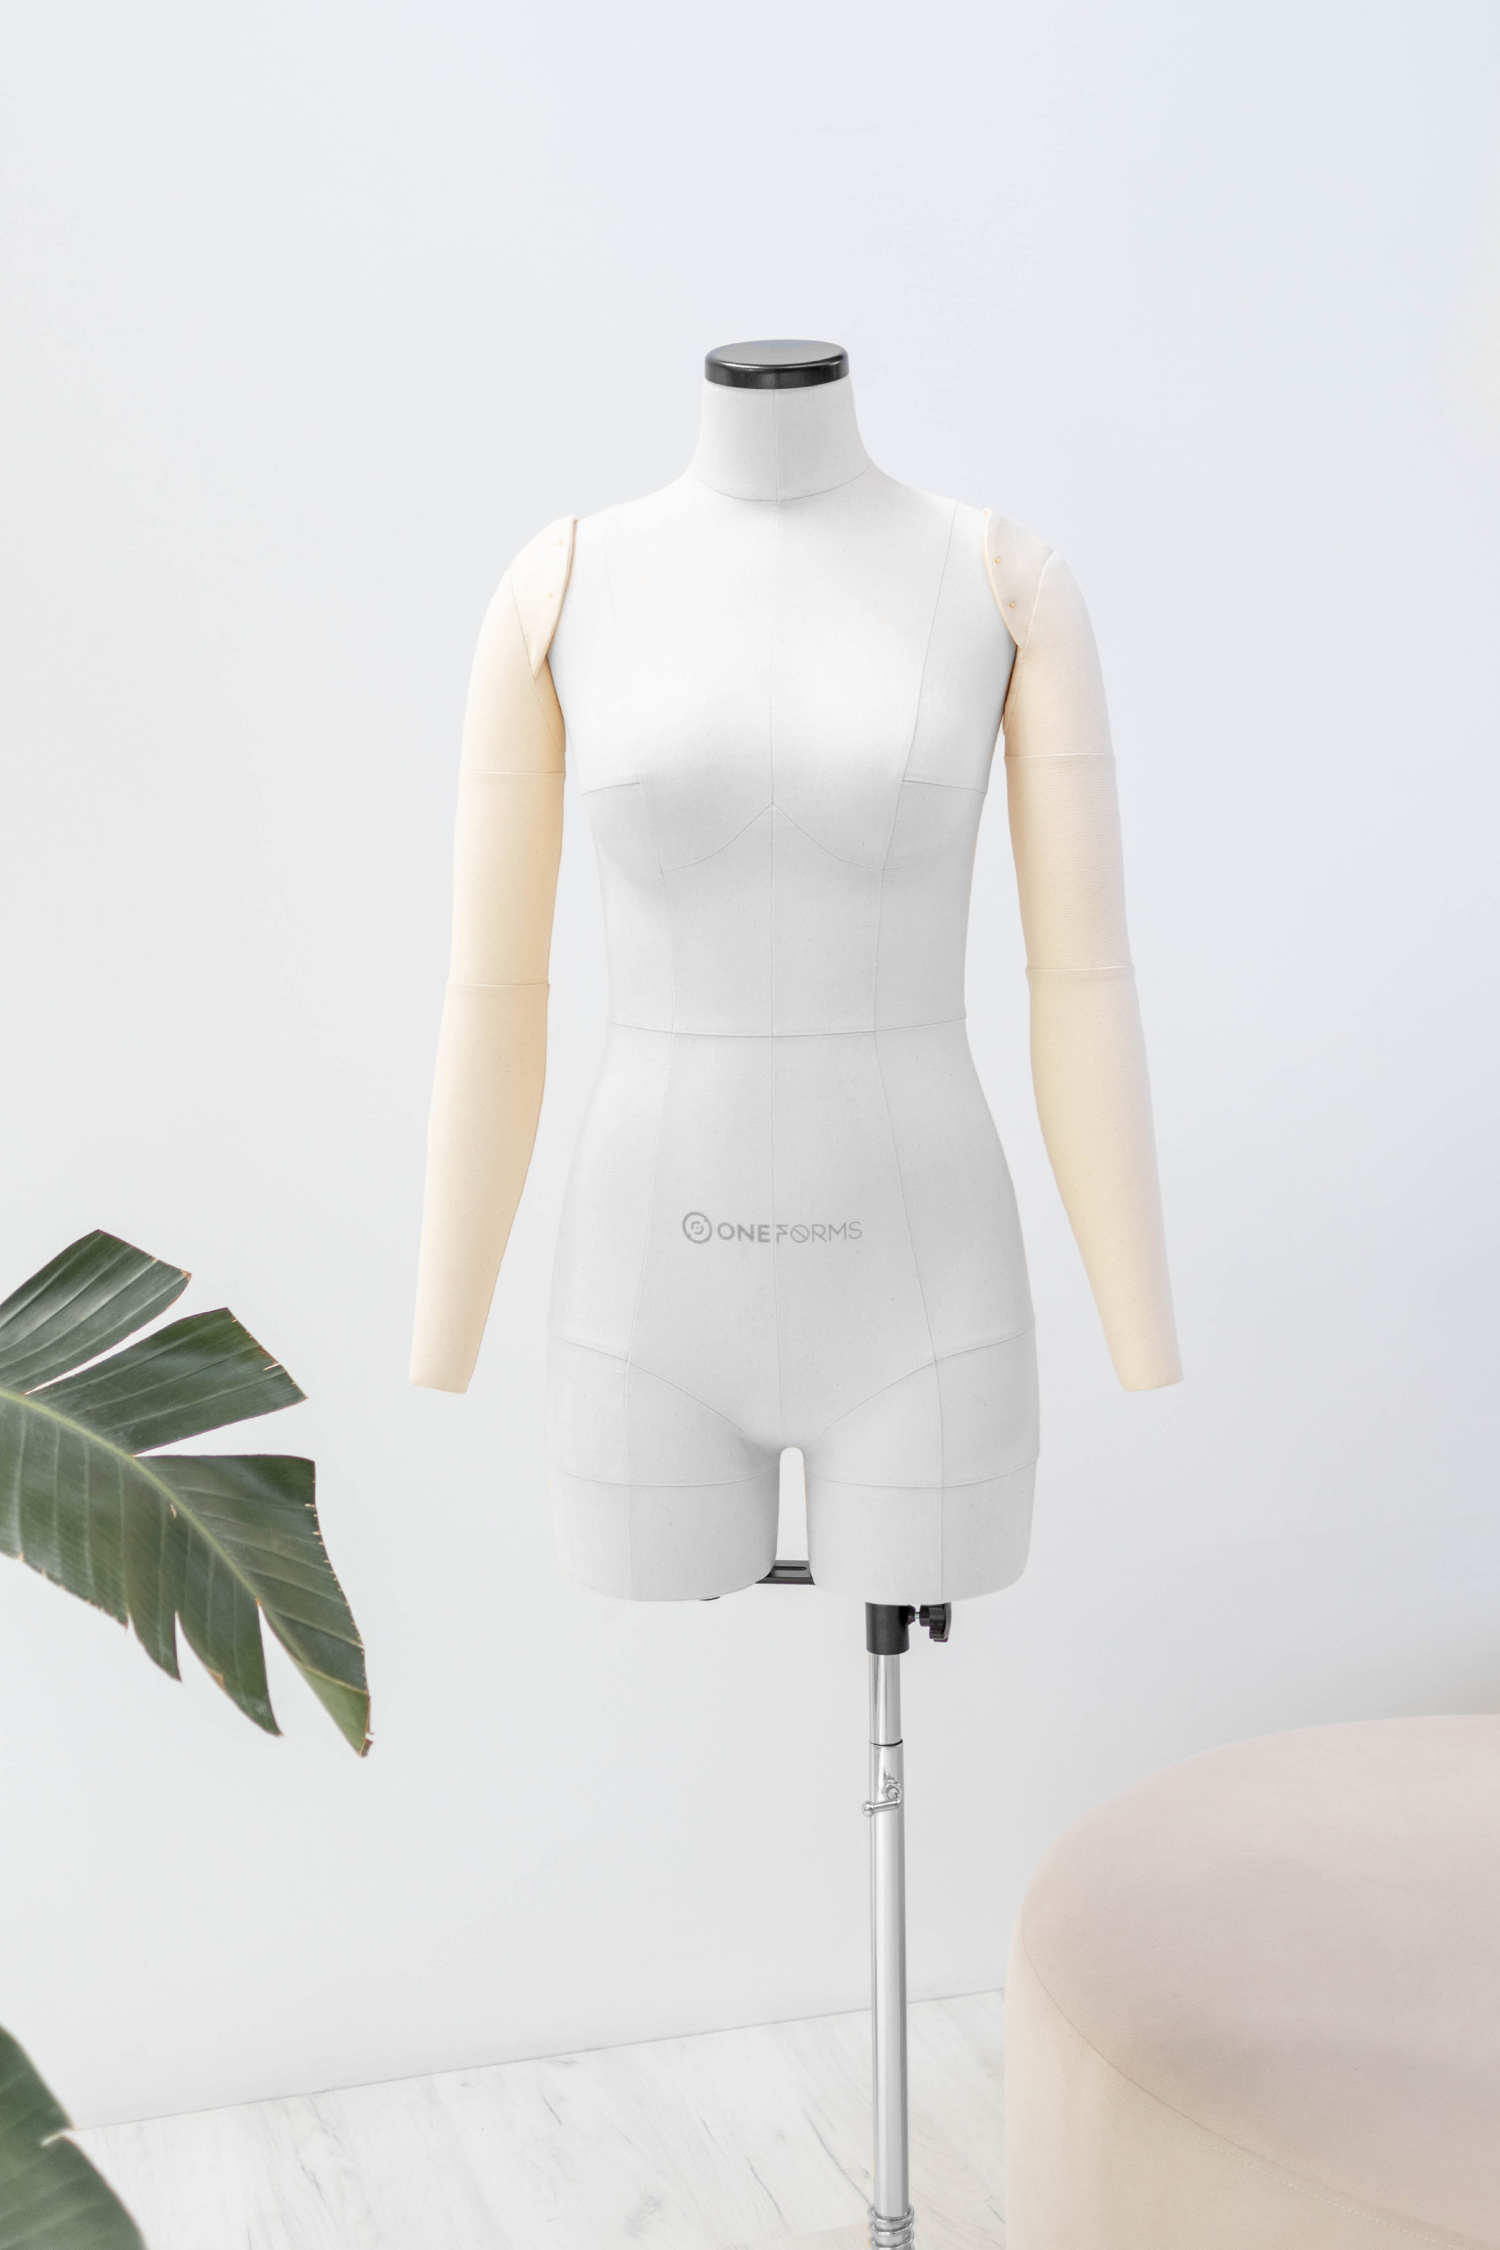 Garment Tailors Dressmaker Mannequin Child Size On Sale - Buy Garment  Tailors Dressmaker Mannequin Child Size On Sale Product on